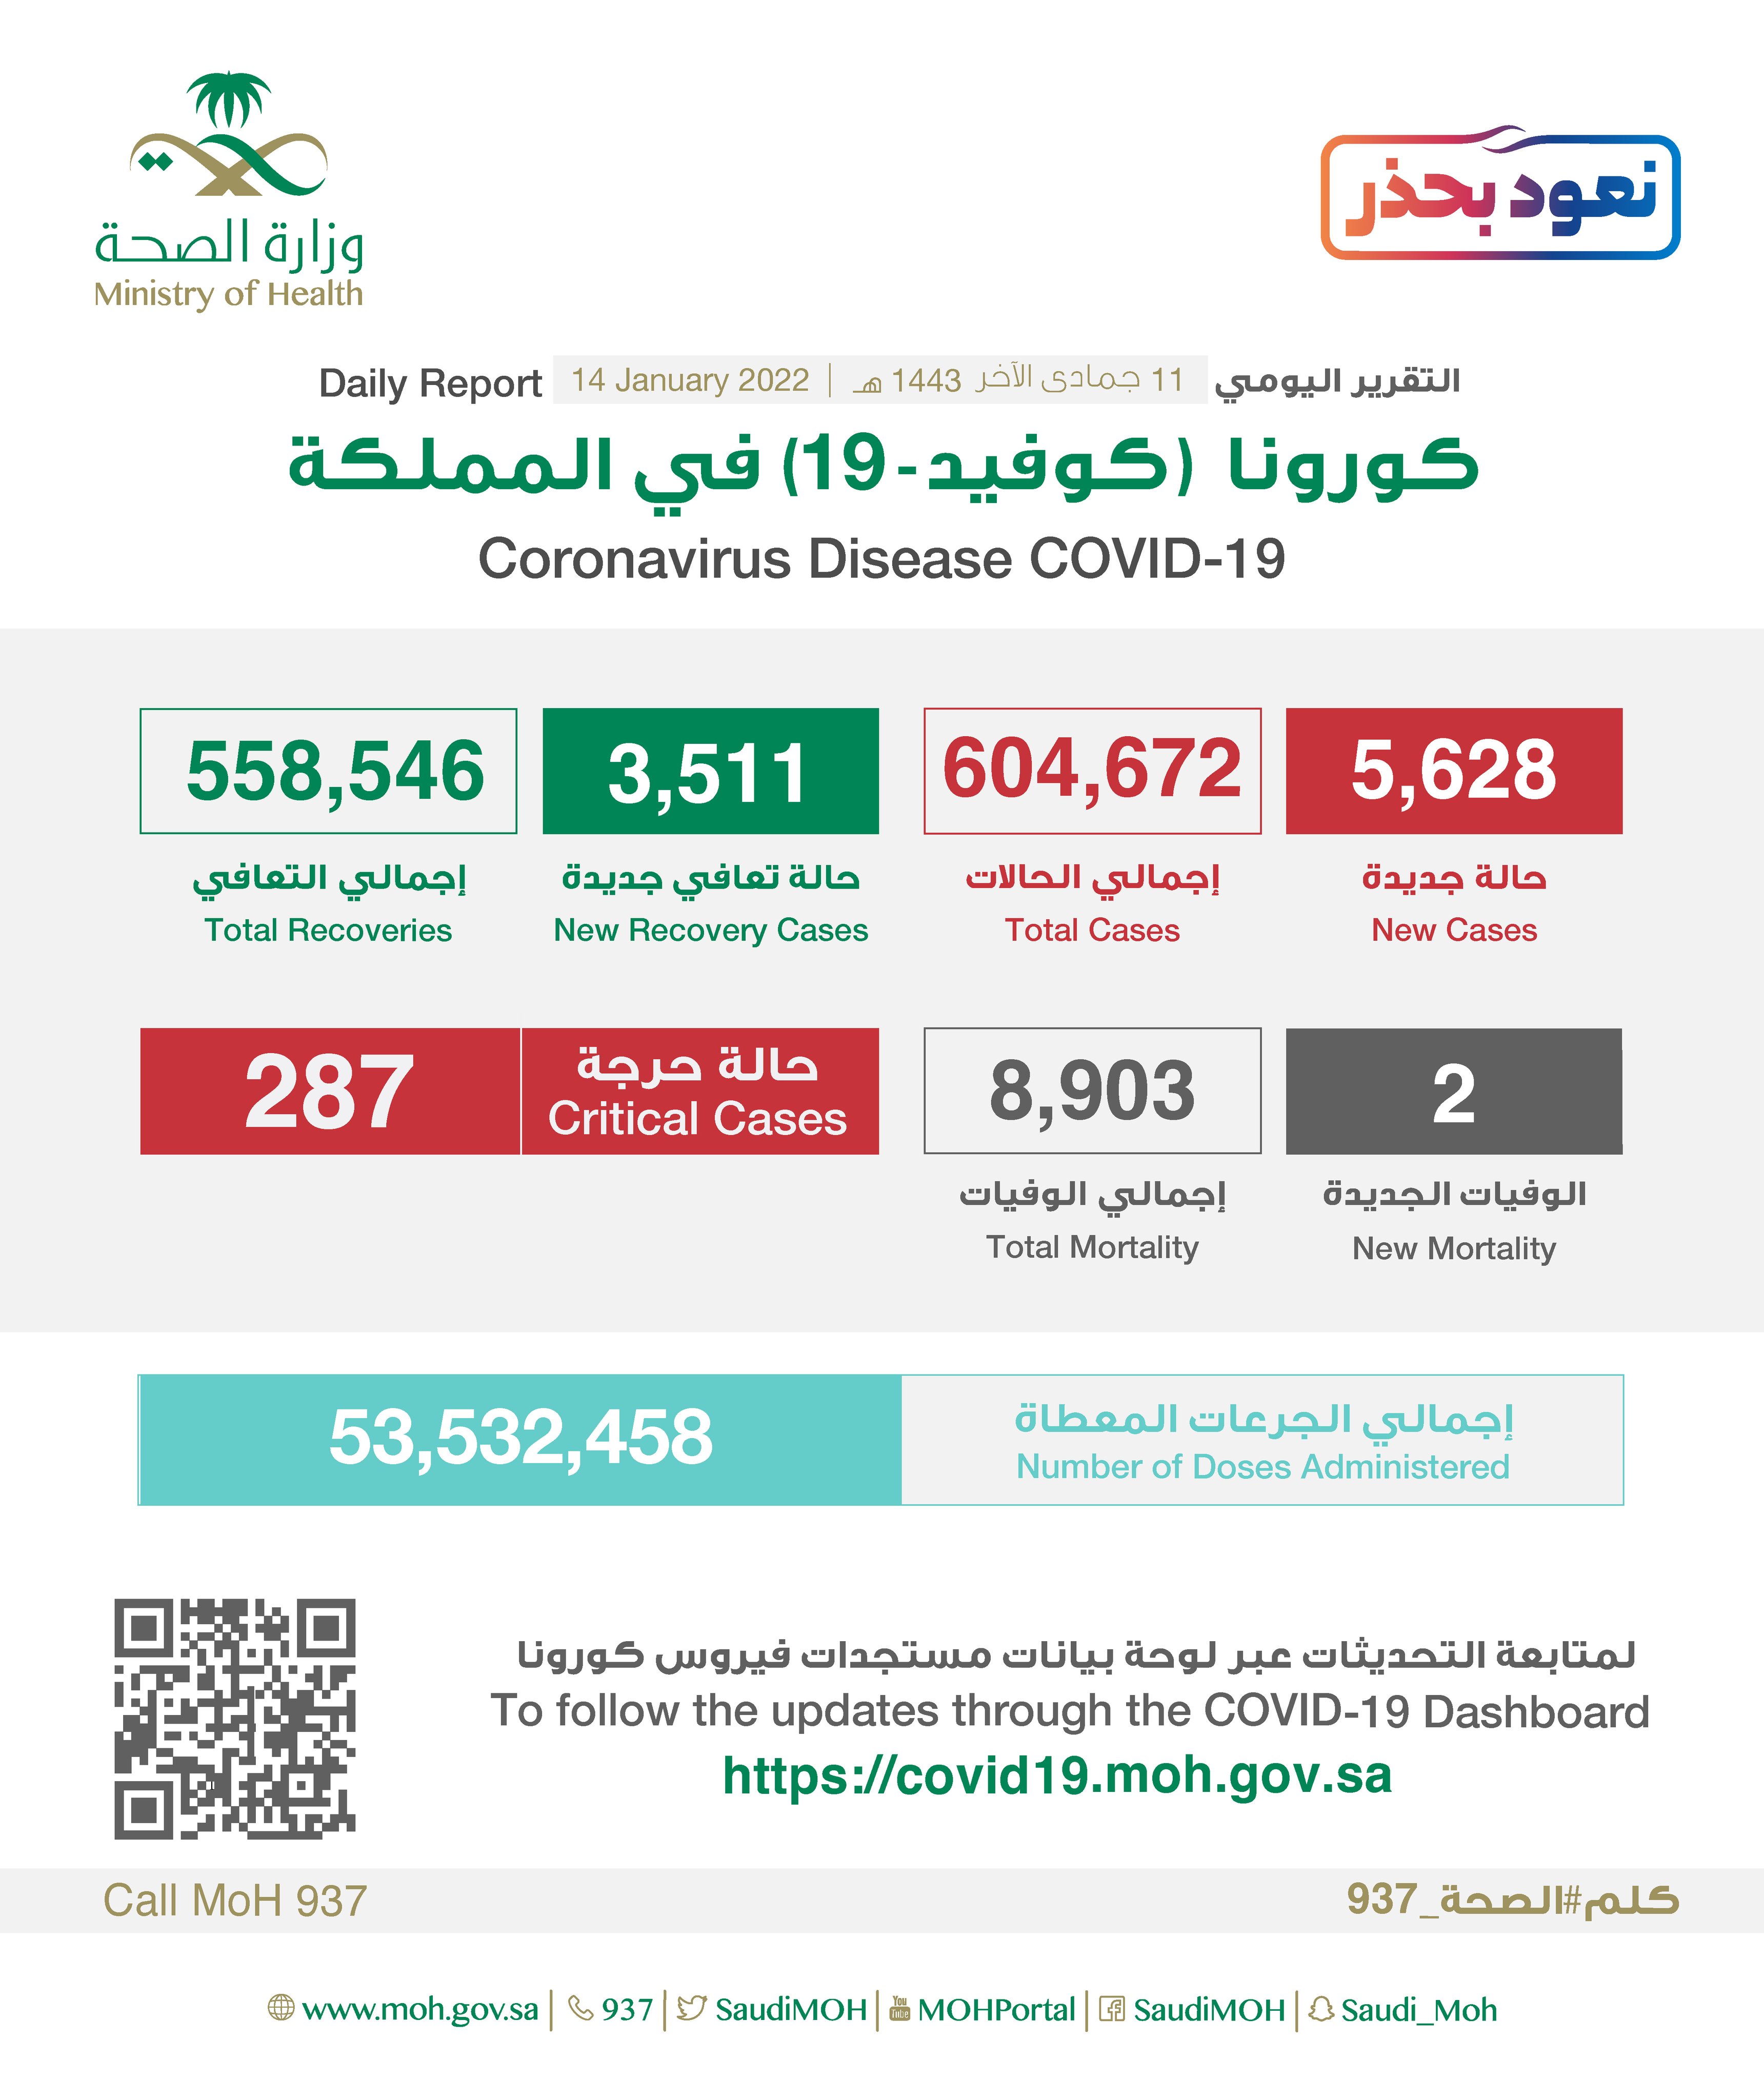 Saudi Arabia Coronavirus : Total Cases : 604,672, New Cases : ,5,628, Cured : 558,546, Deaths: 8,903, Active Cases : 37,223